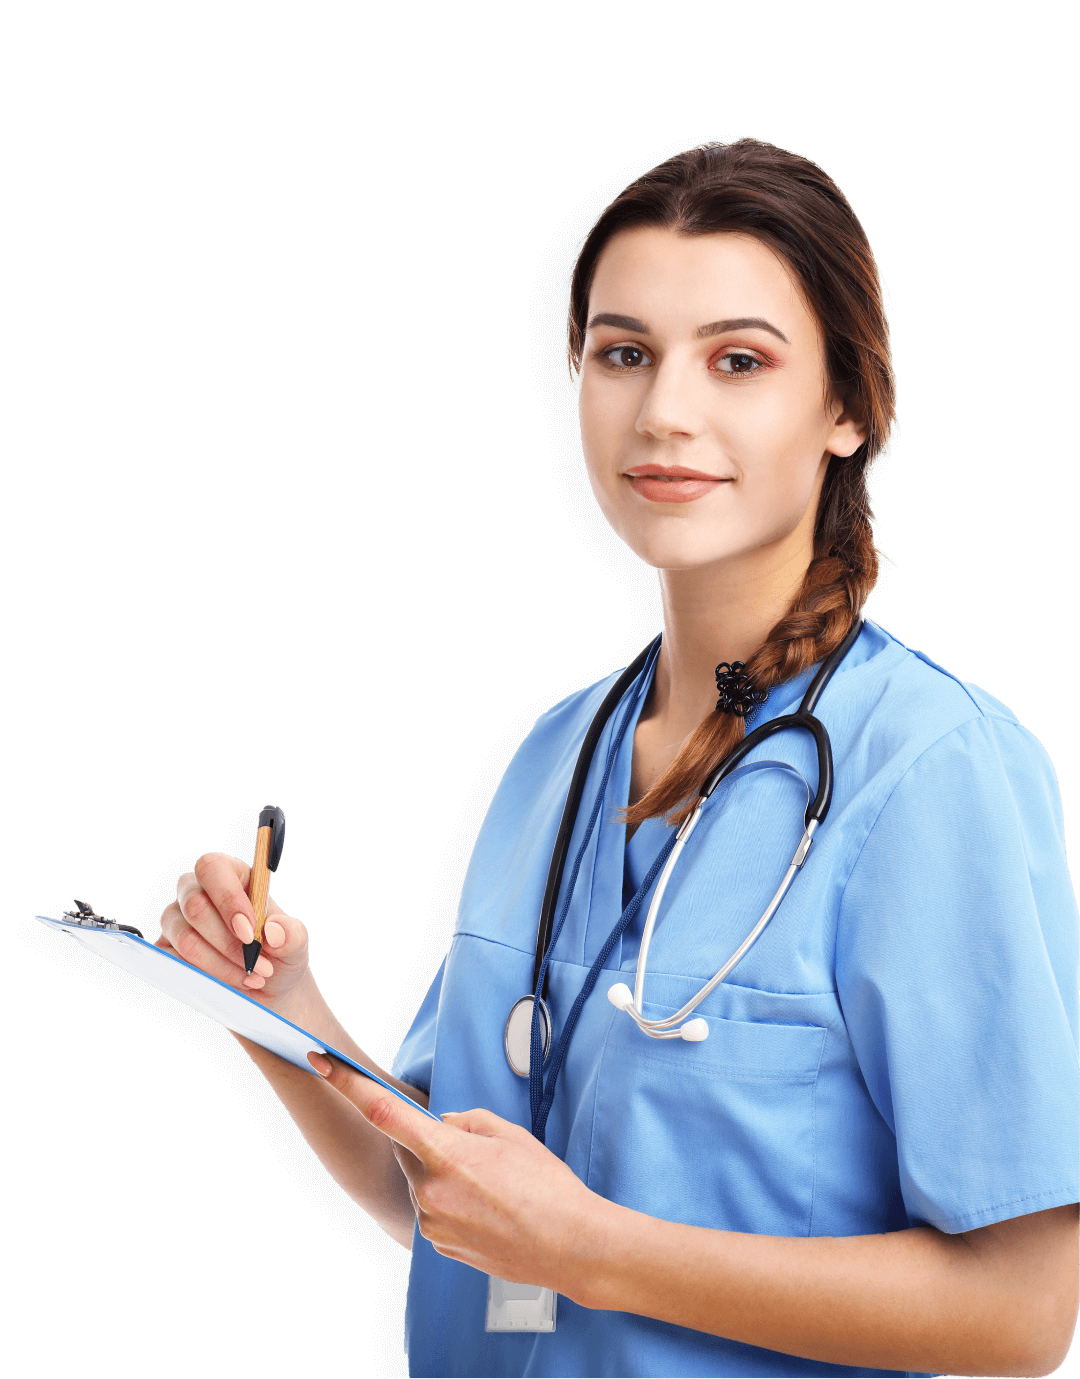 Nurse-Corrections (CCHP) professional